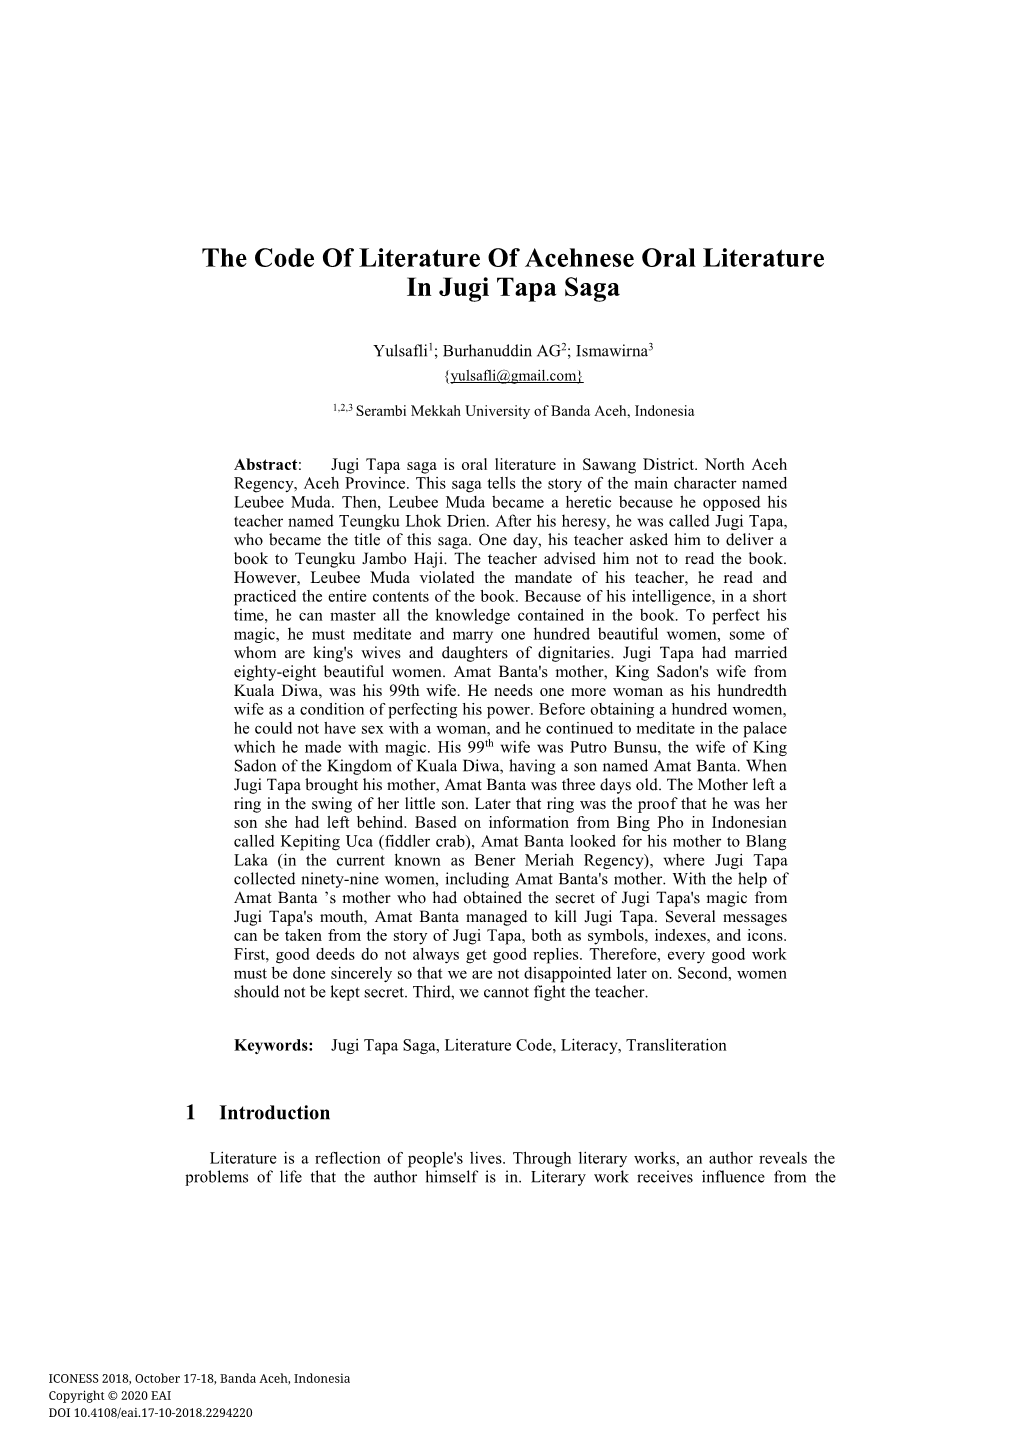 The Code of Literature of Acehnese Oral Literature in Jugi Tapa Saga